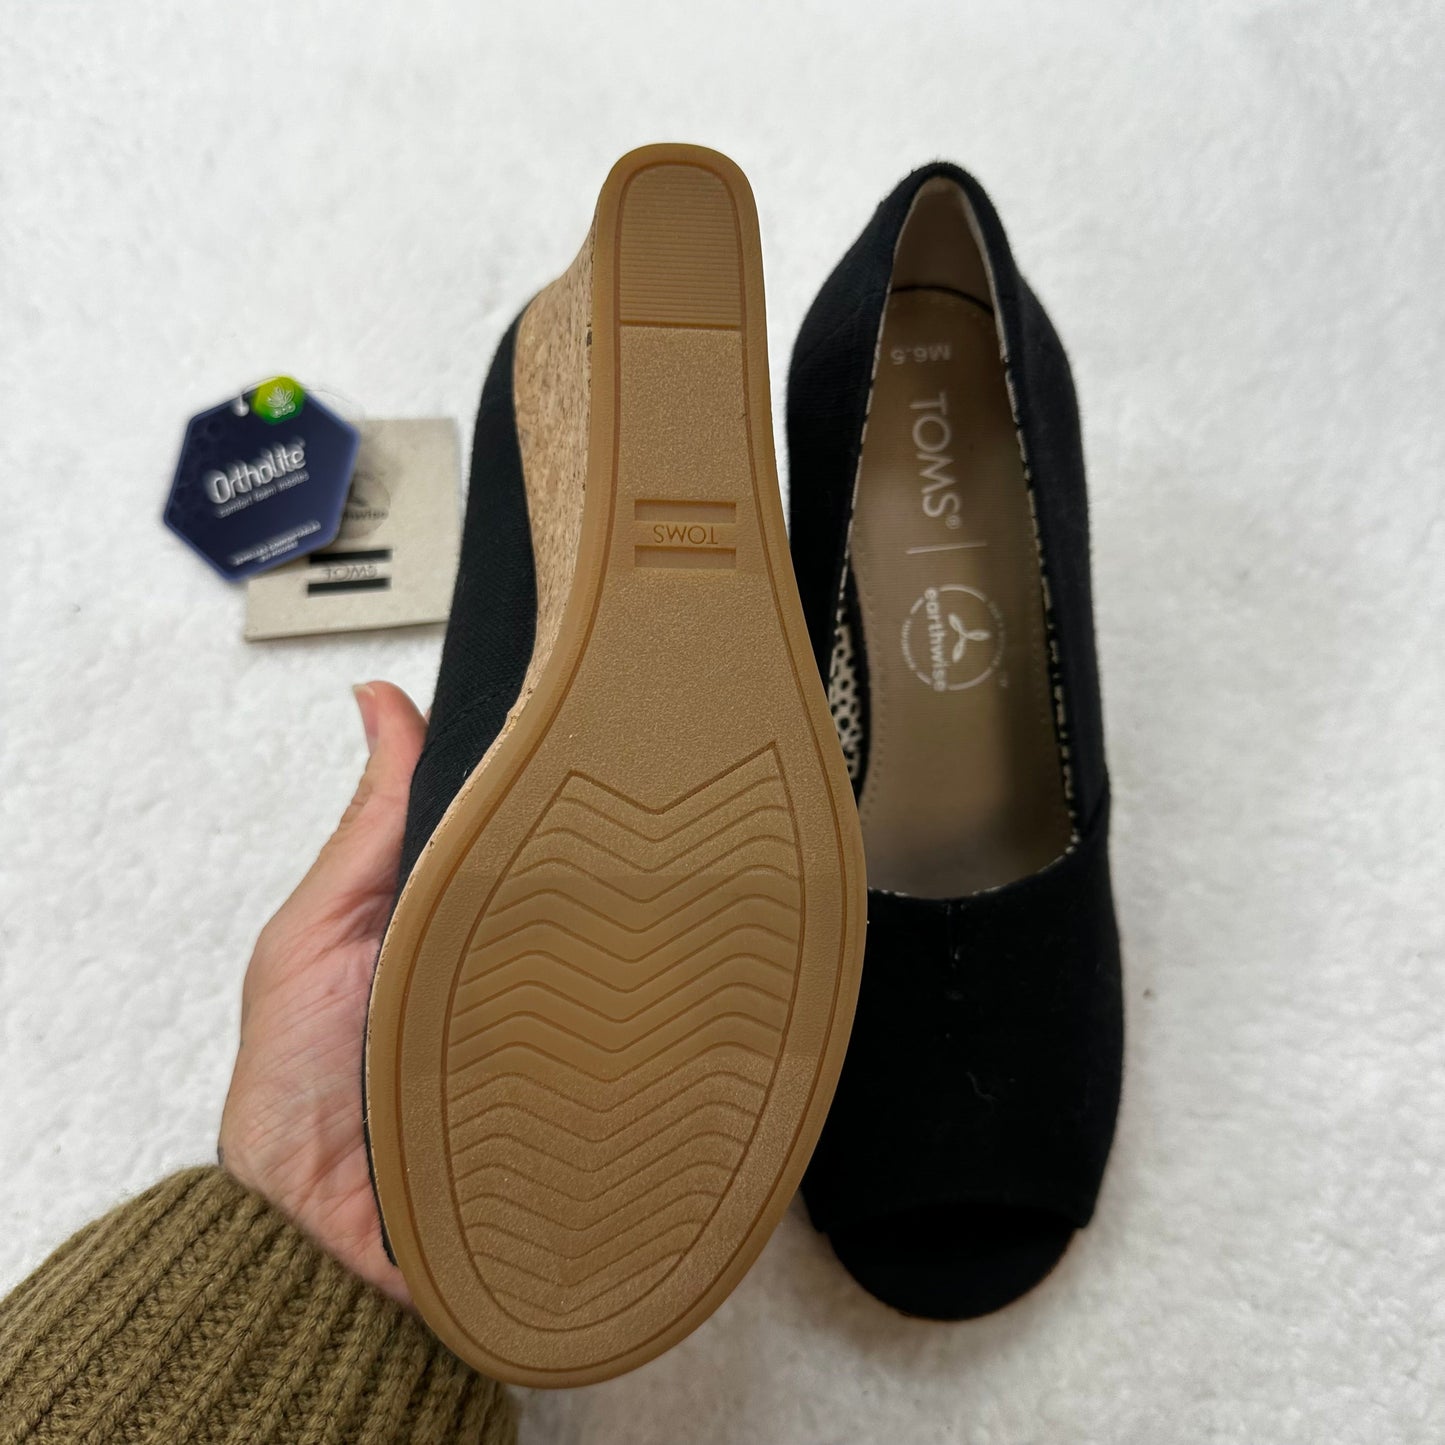 Black Shoes Heels Espadrille Wedge Toms, Size 6.5